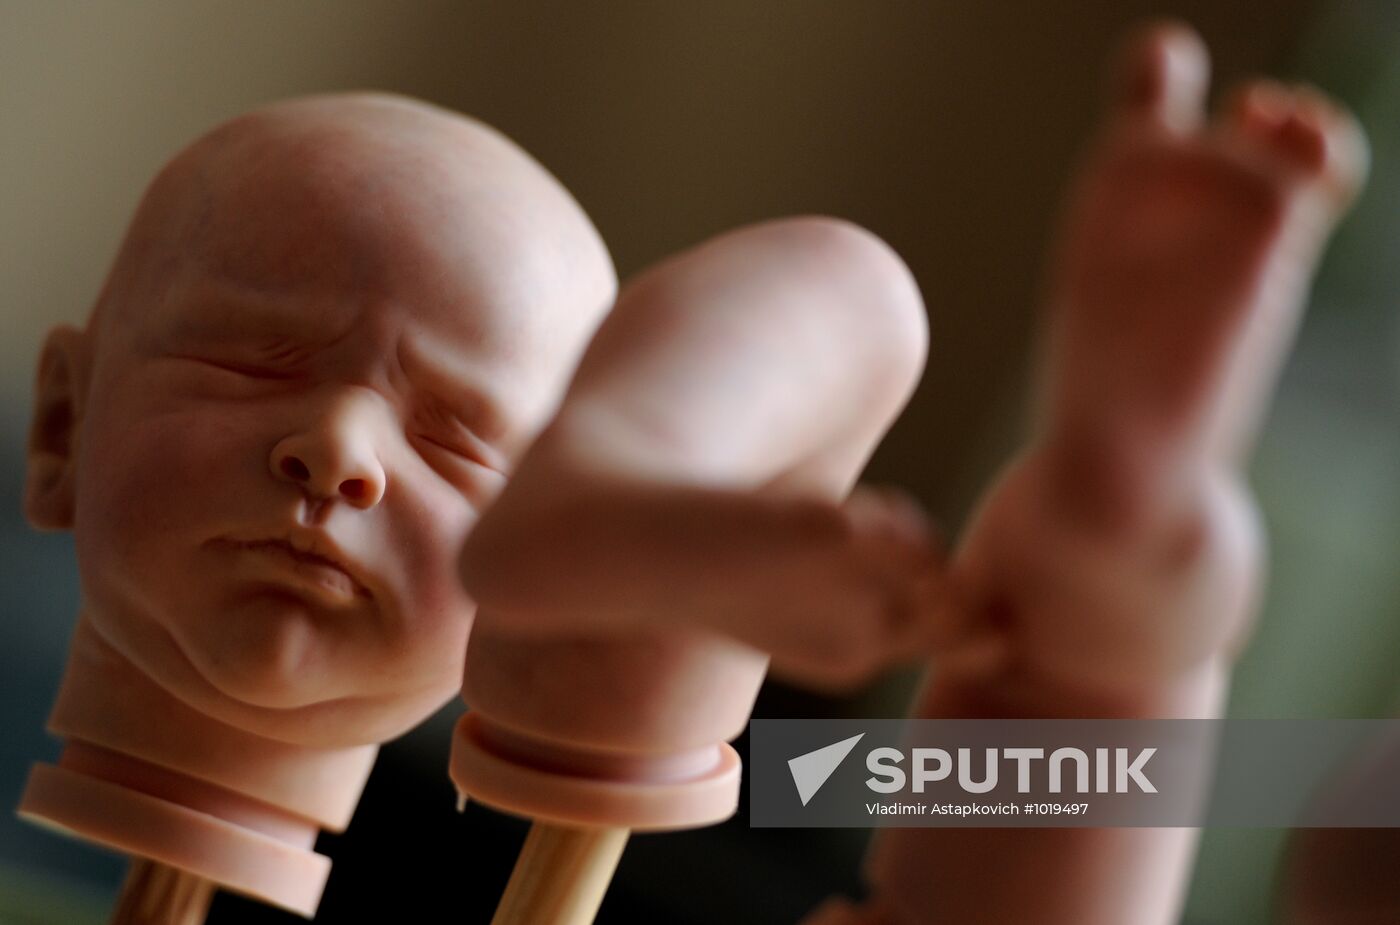 Reborn dolls made by Yekaterina Samgina